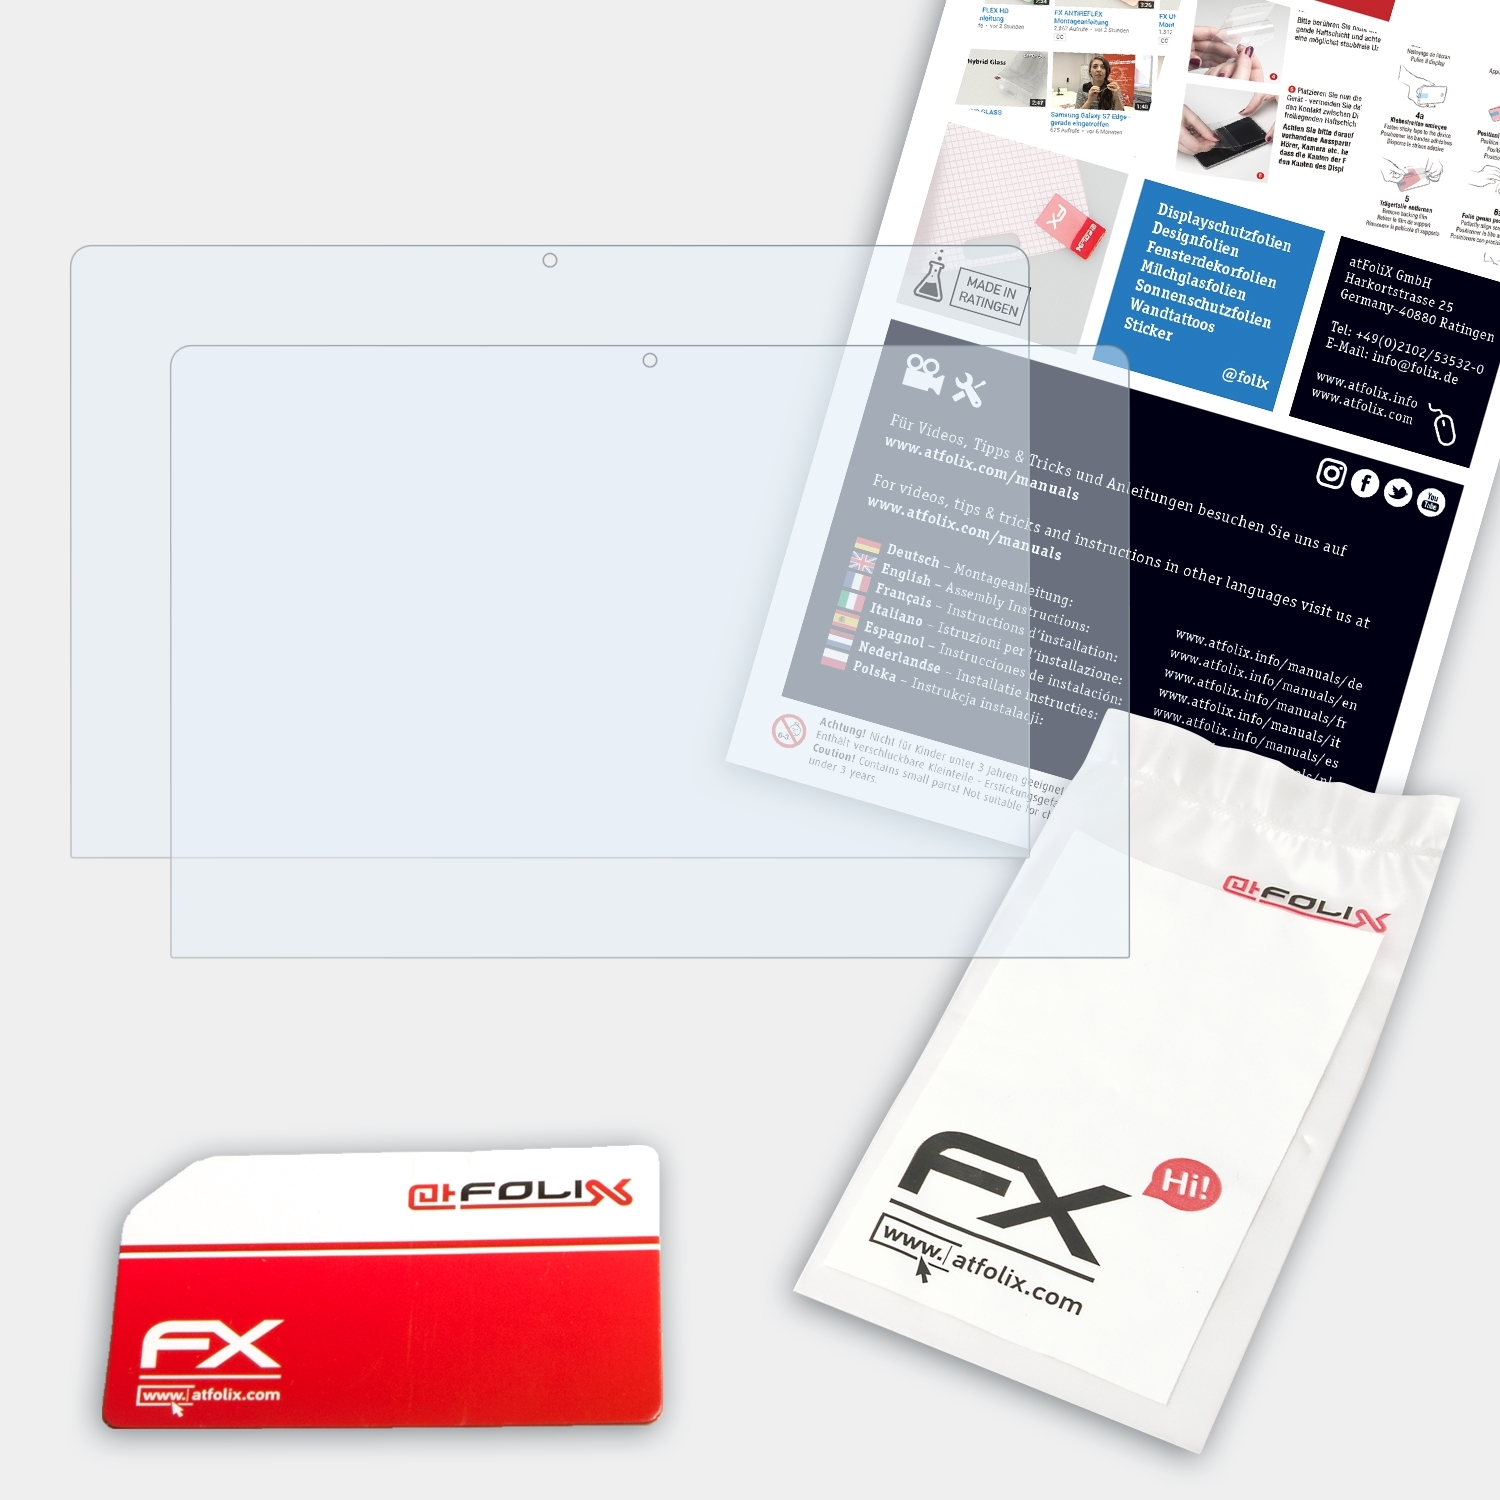 Iconia 2x 10 ATFOLIX (B3-A50)) FX-Clear One Displayschutz(für Acer